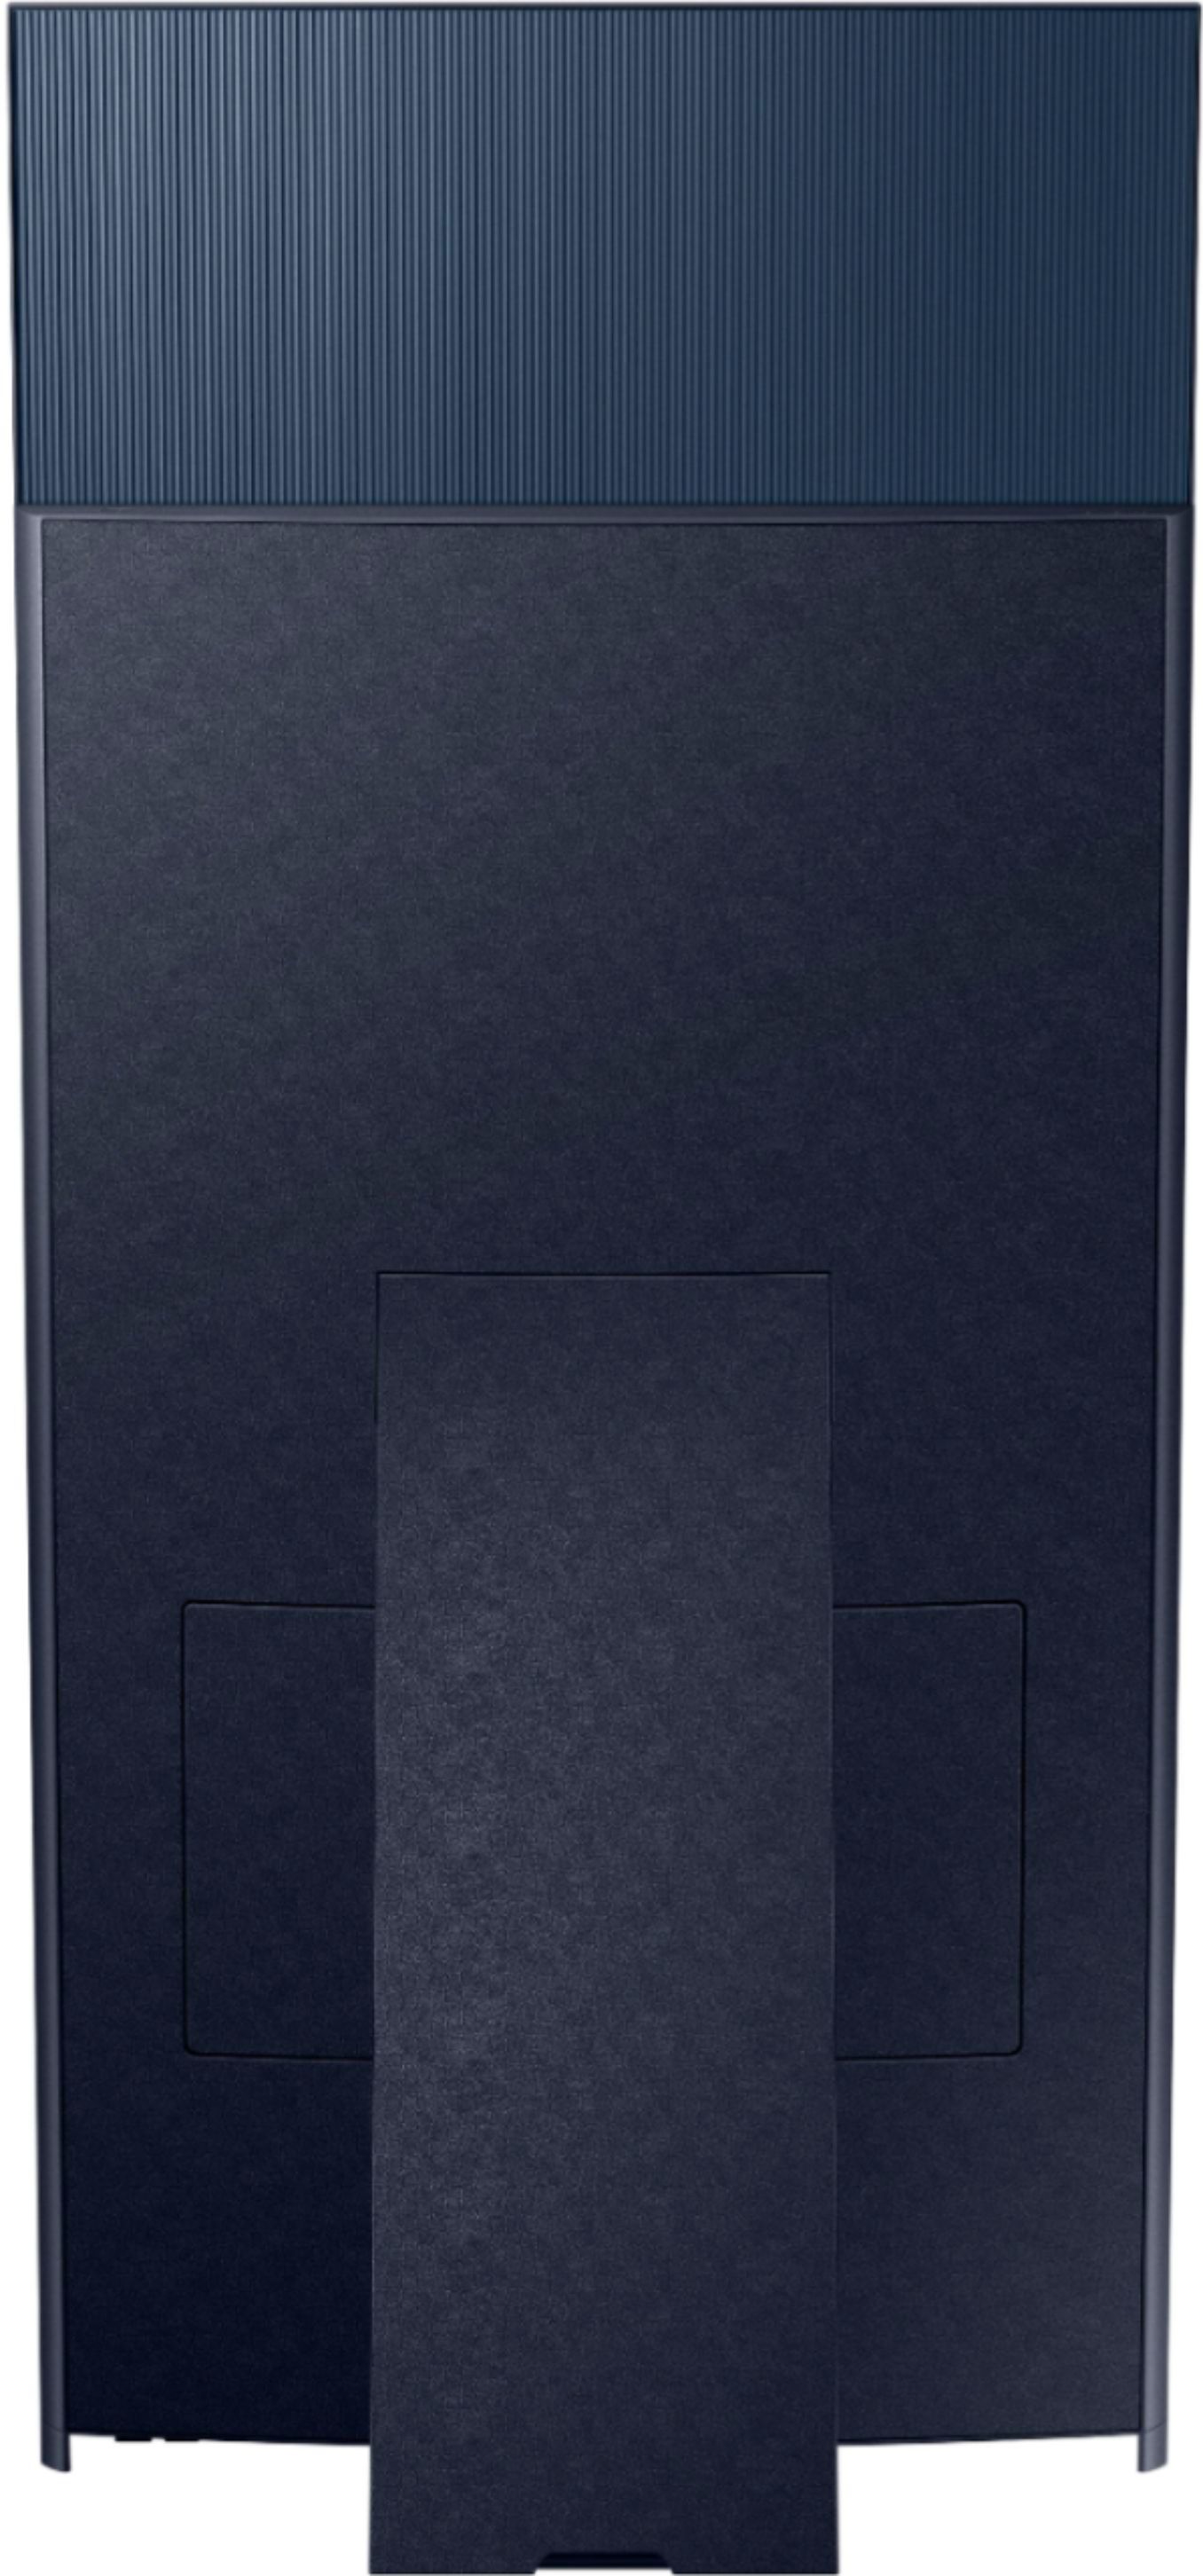 Back View: LG - 65" Class NanoCell 81 Series LED 4K UHD Smart webOS TV